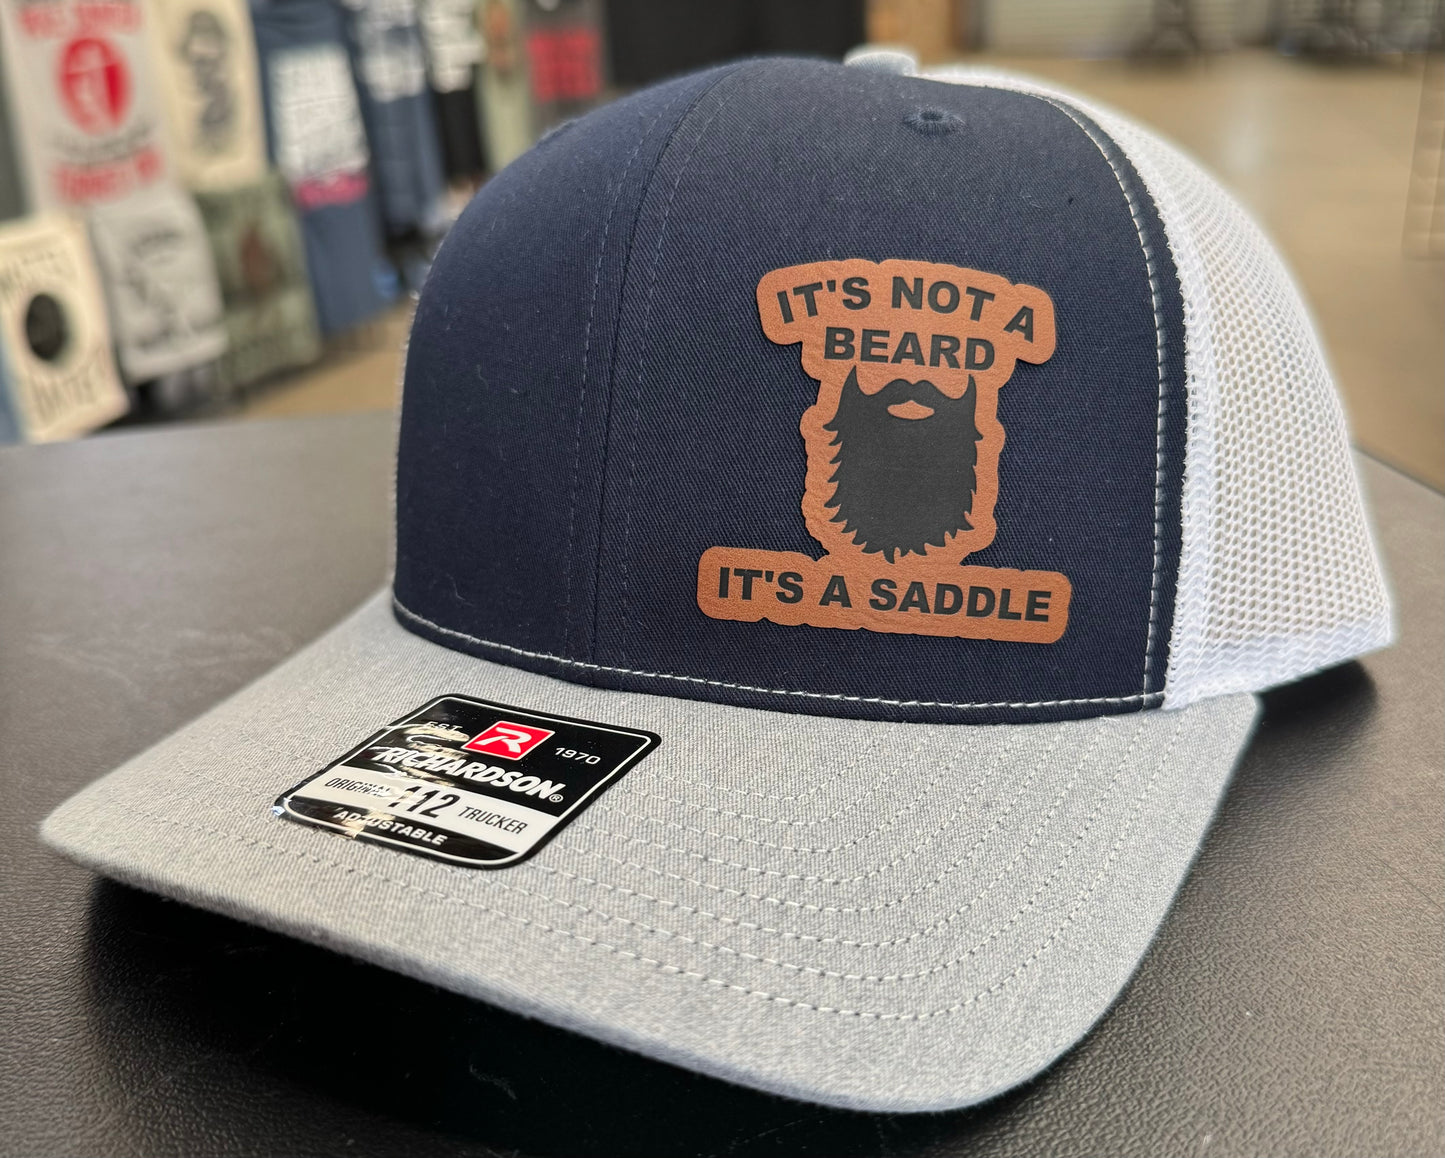 It’s not a beard it’s a saddle